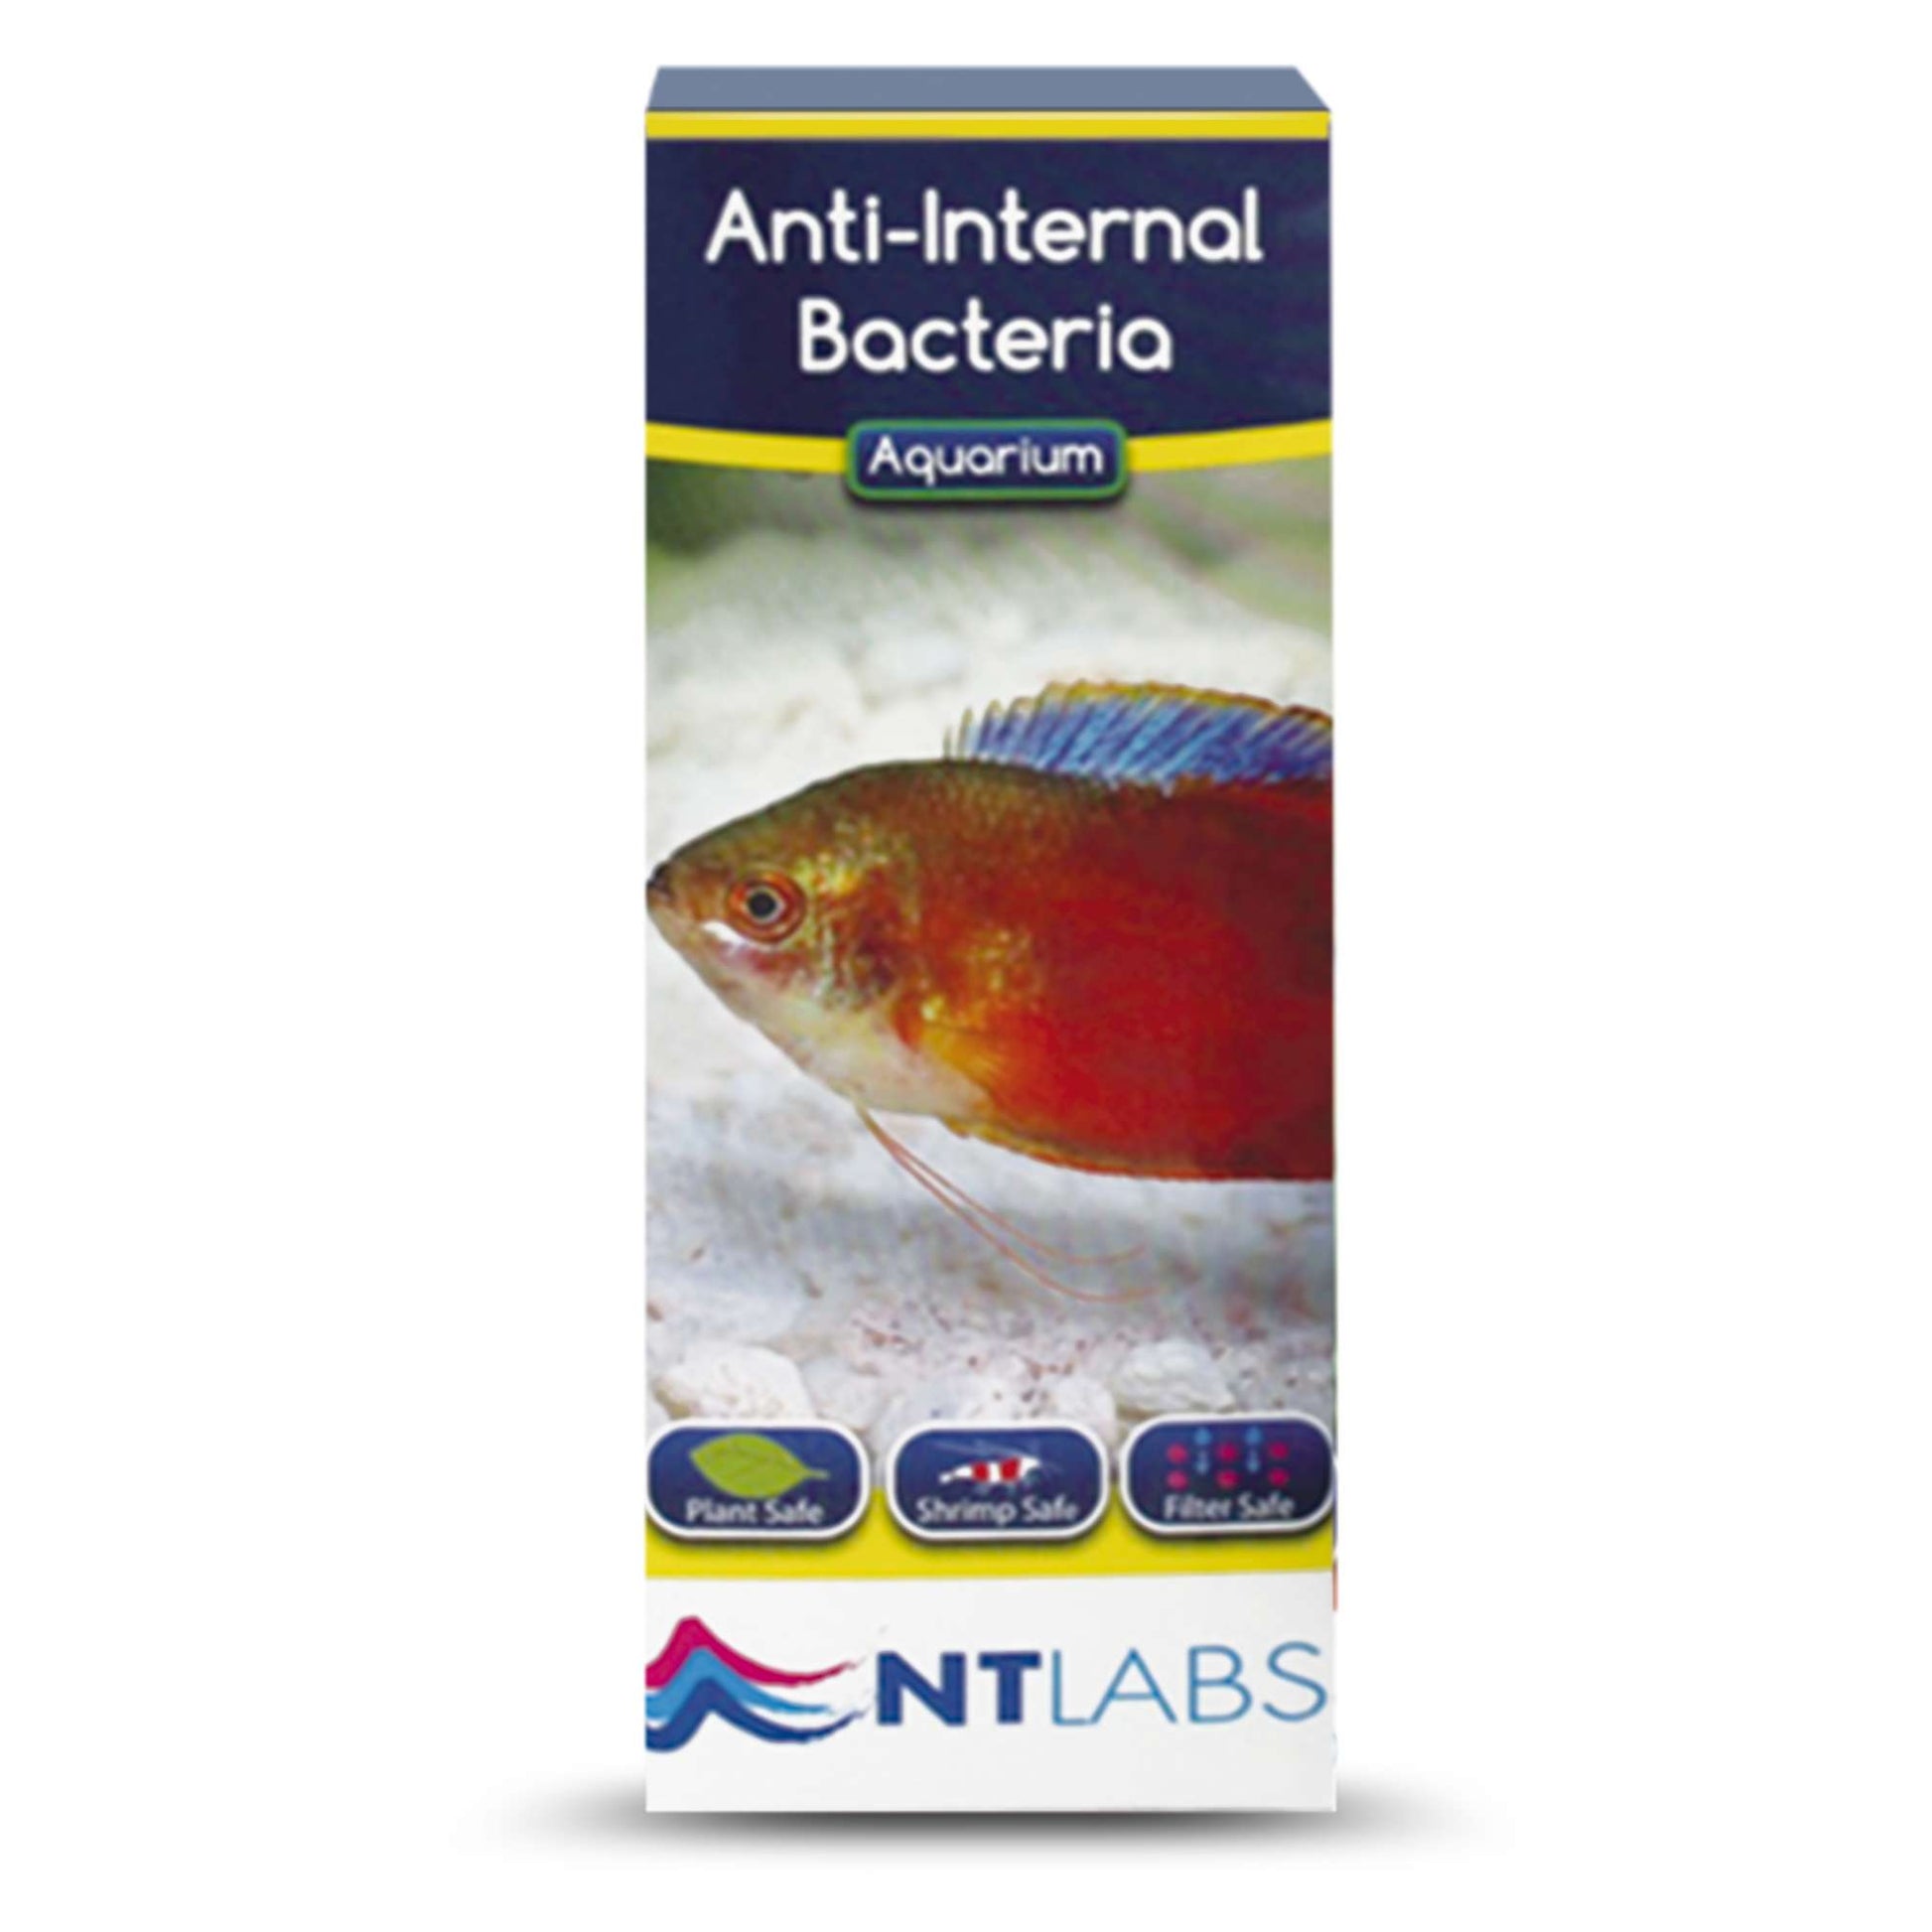 Anti-Internal Bacteria de NTLABS